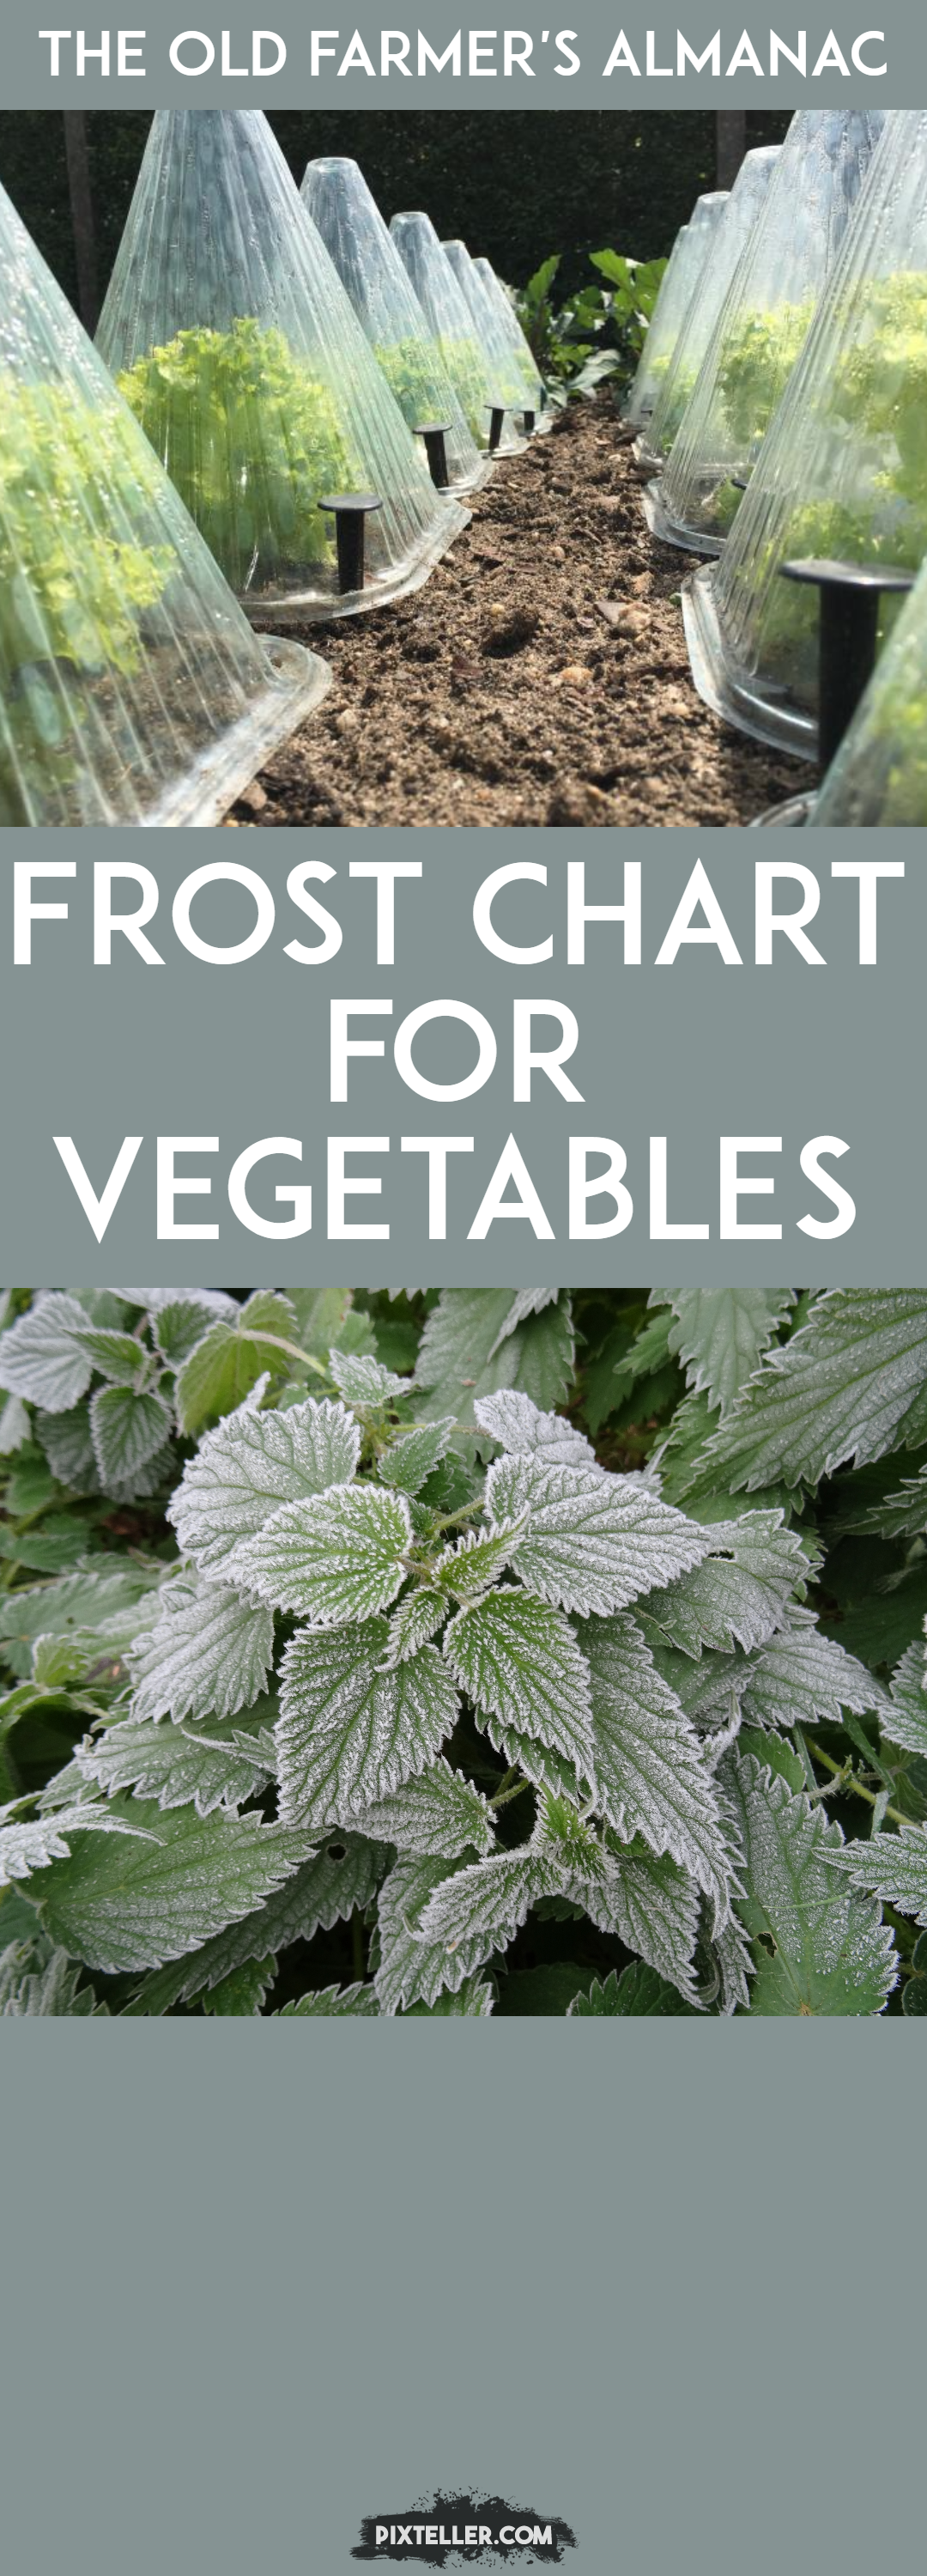 OFA 3-21-17 frost chart Design 